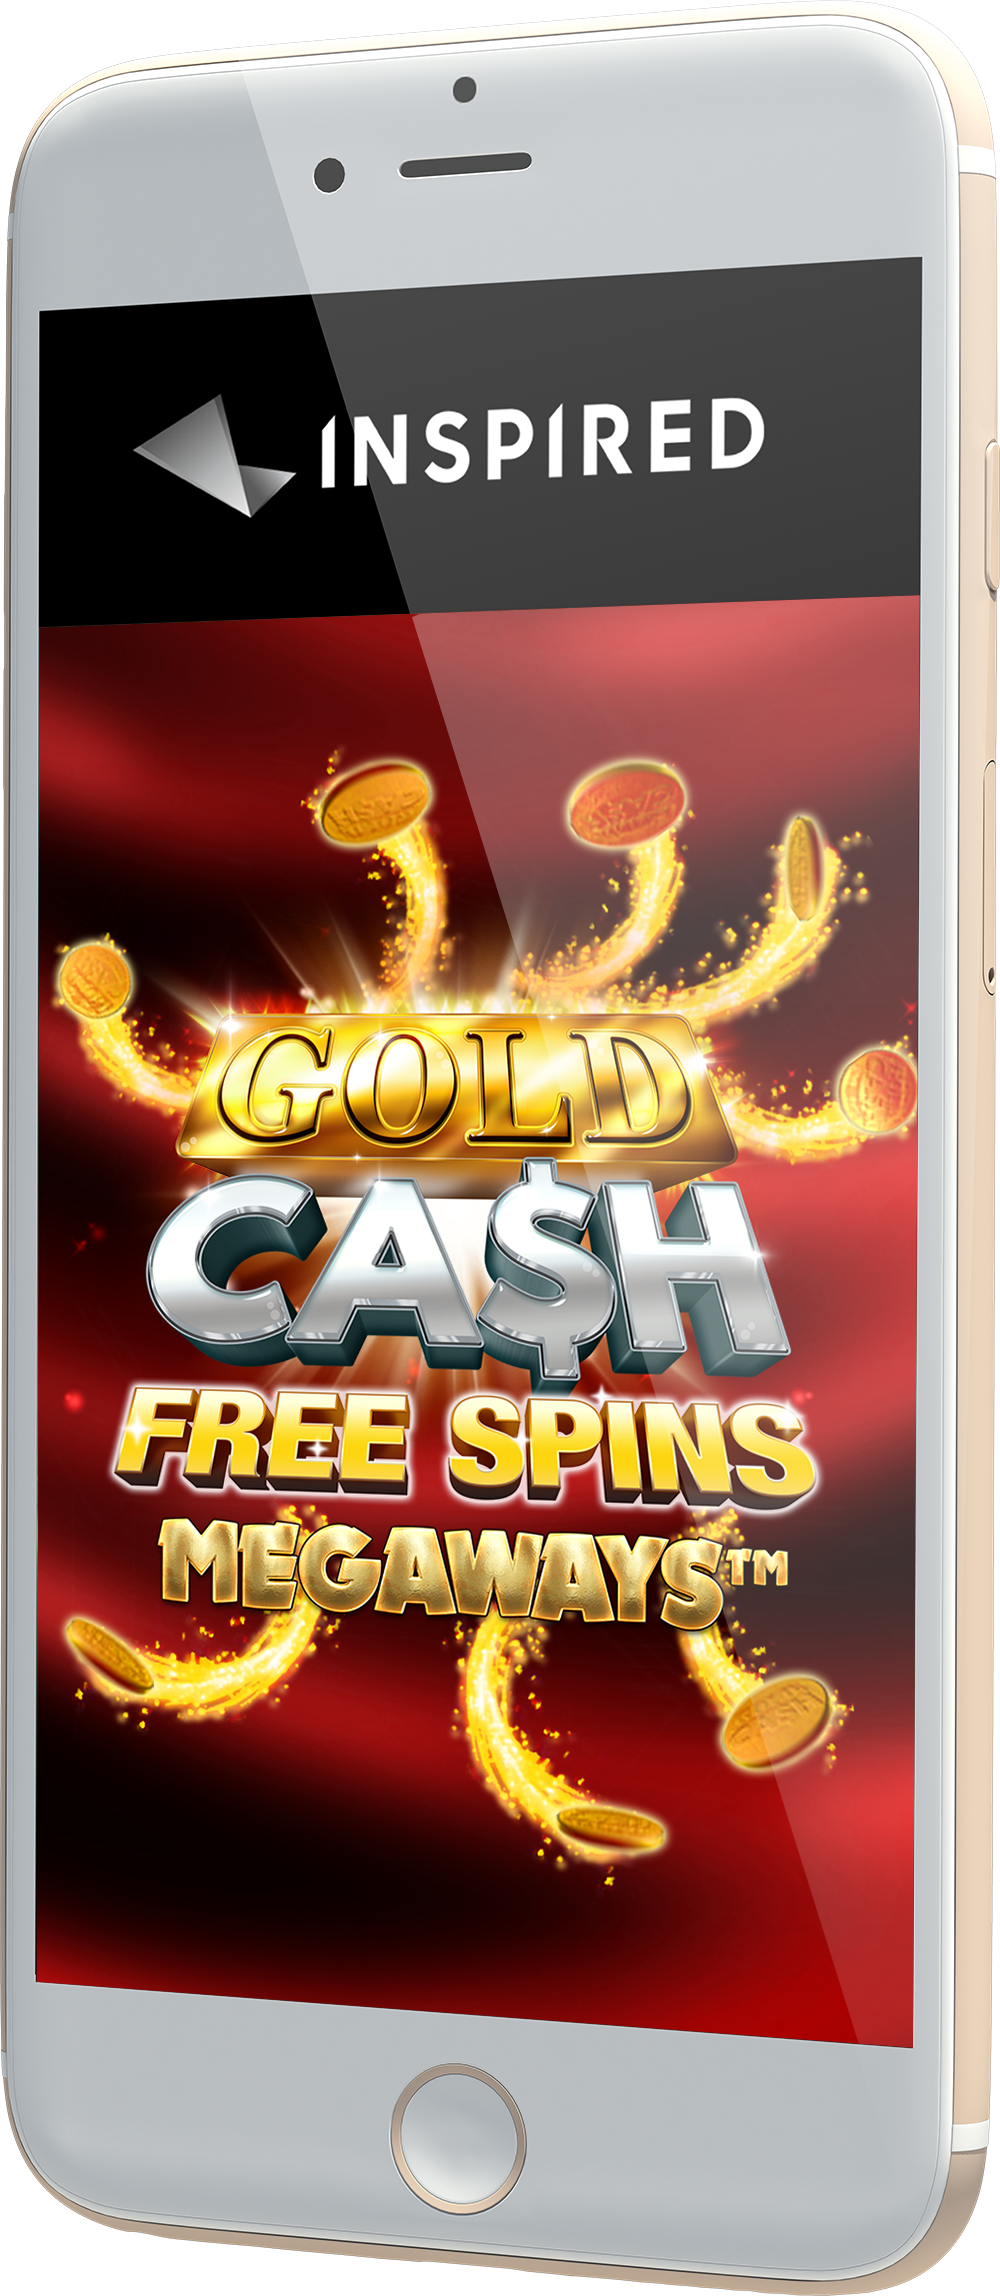 GOLD CASH FREE SPINS MEGAWAYS PHONE